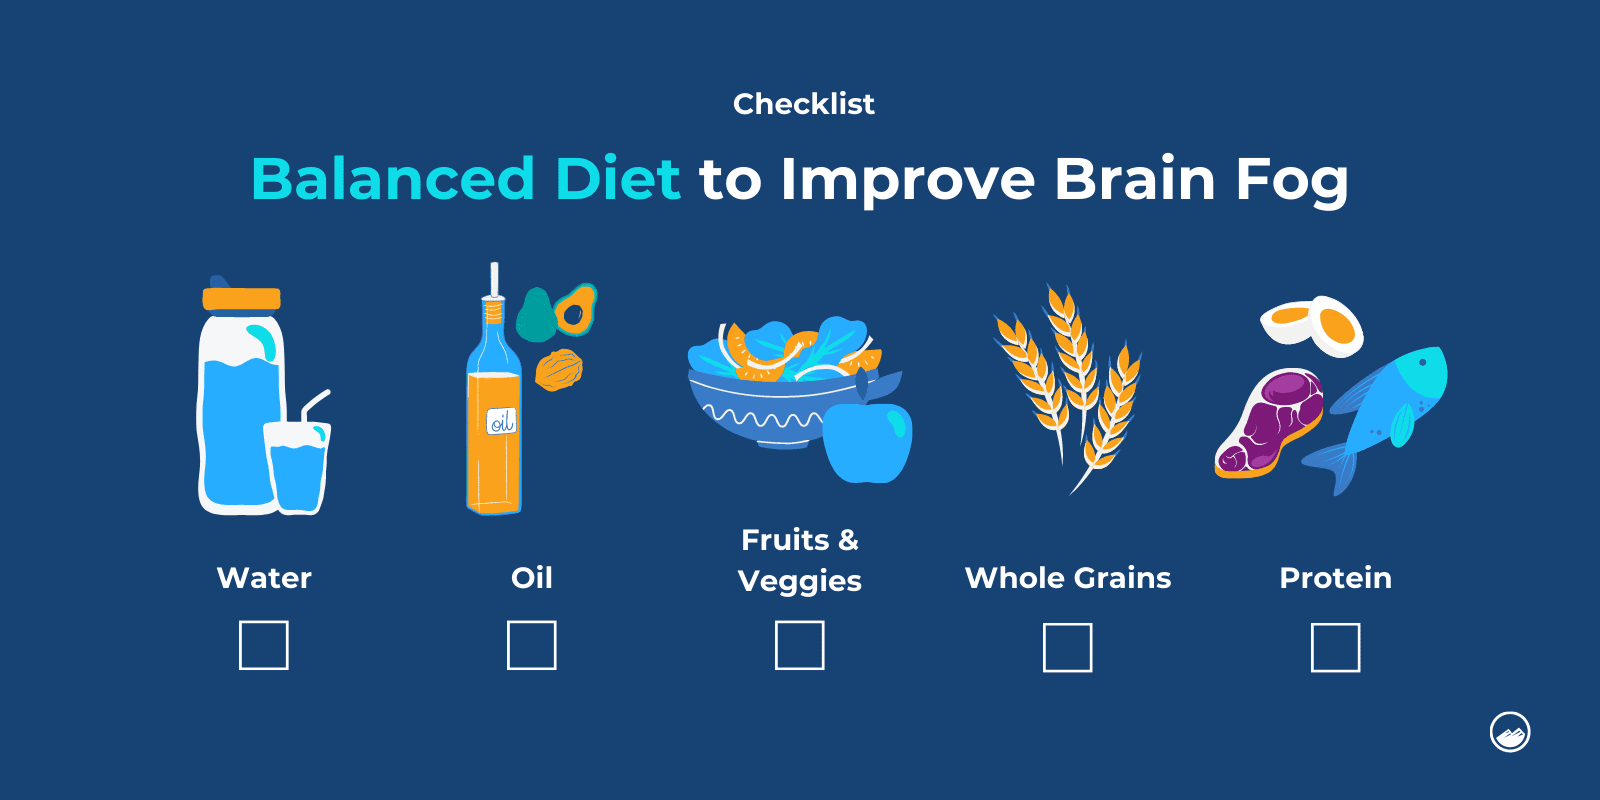 "Checklist" "Balanced Diet to Improve Brain Fog" written above a checklist depicting each nutrition 